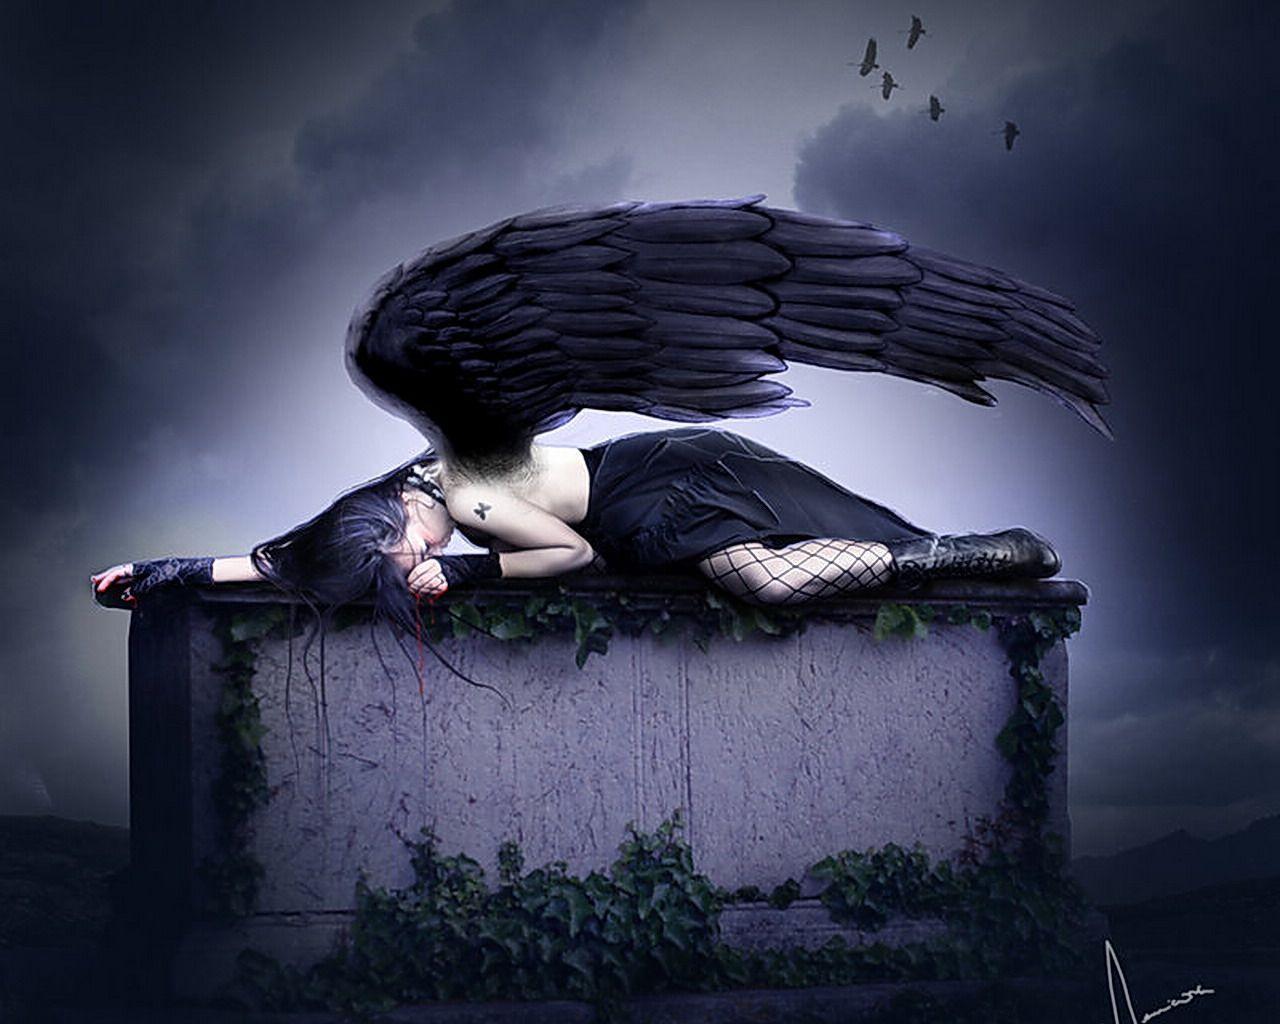 Dark Angels Image & Picture